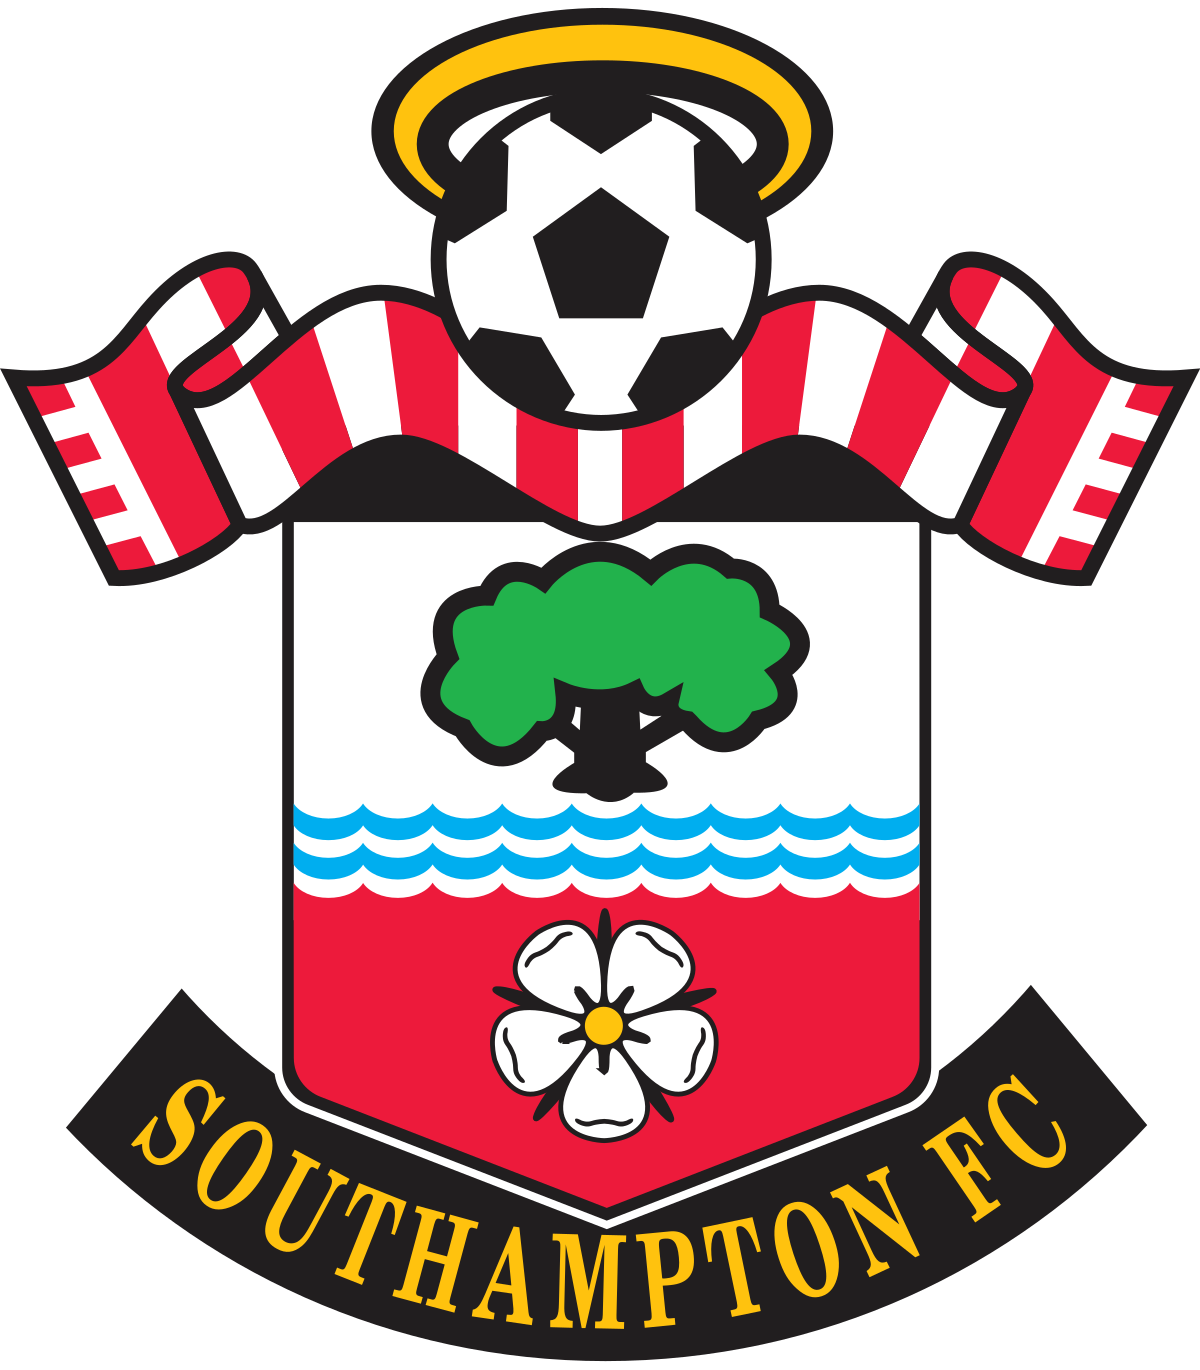 southampton football club.png